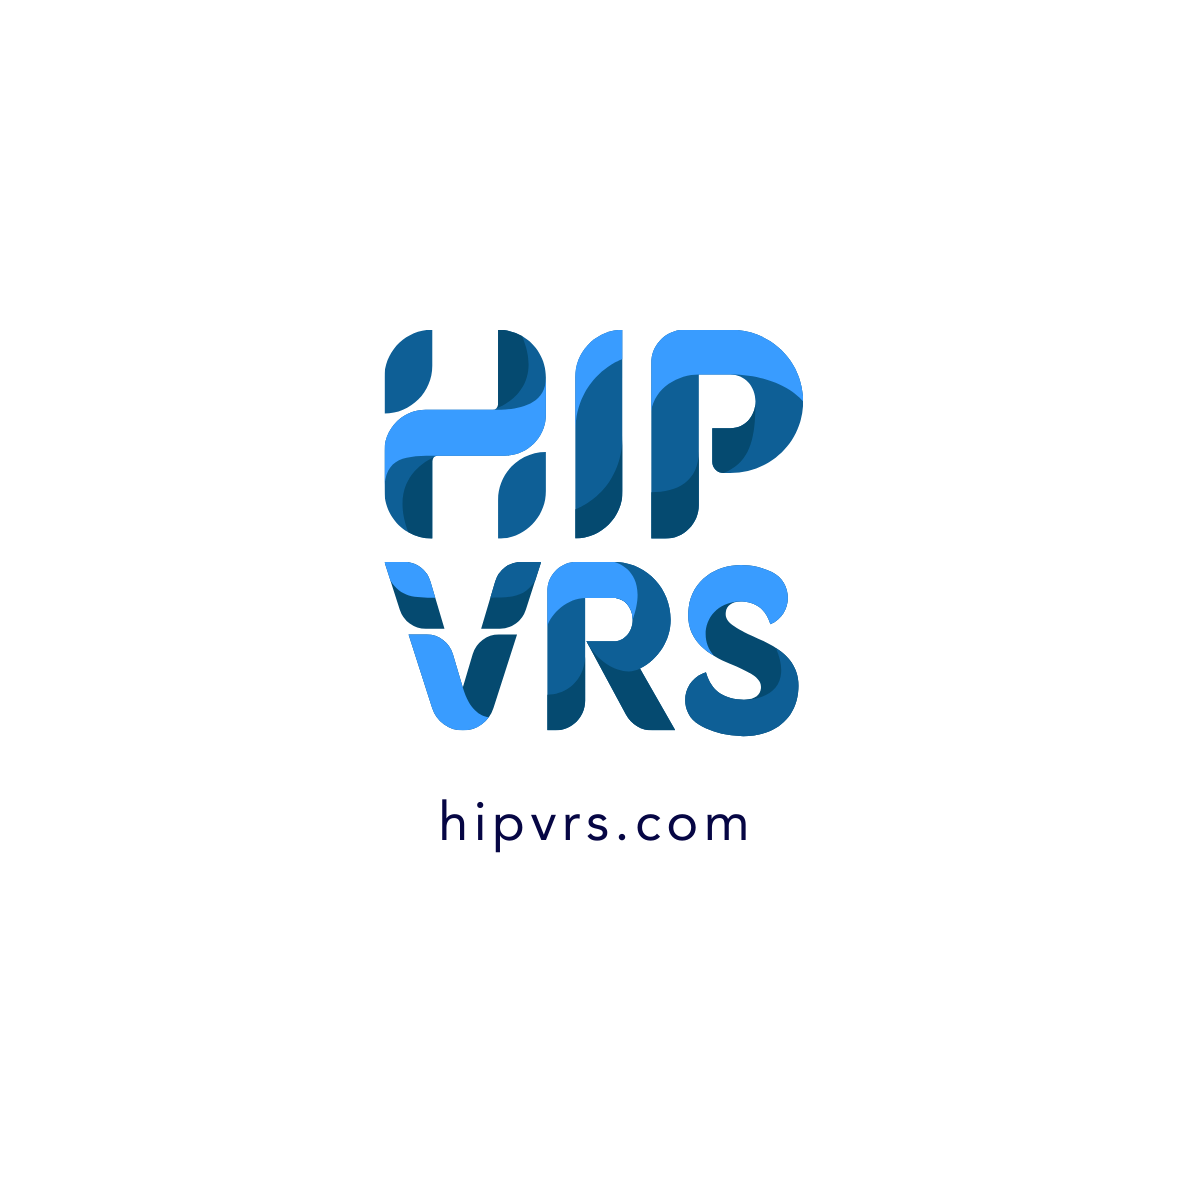 hipvrs.com - domain for sale